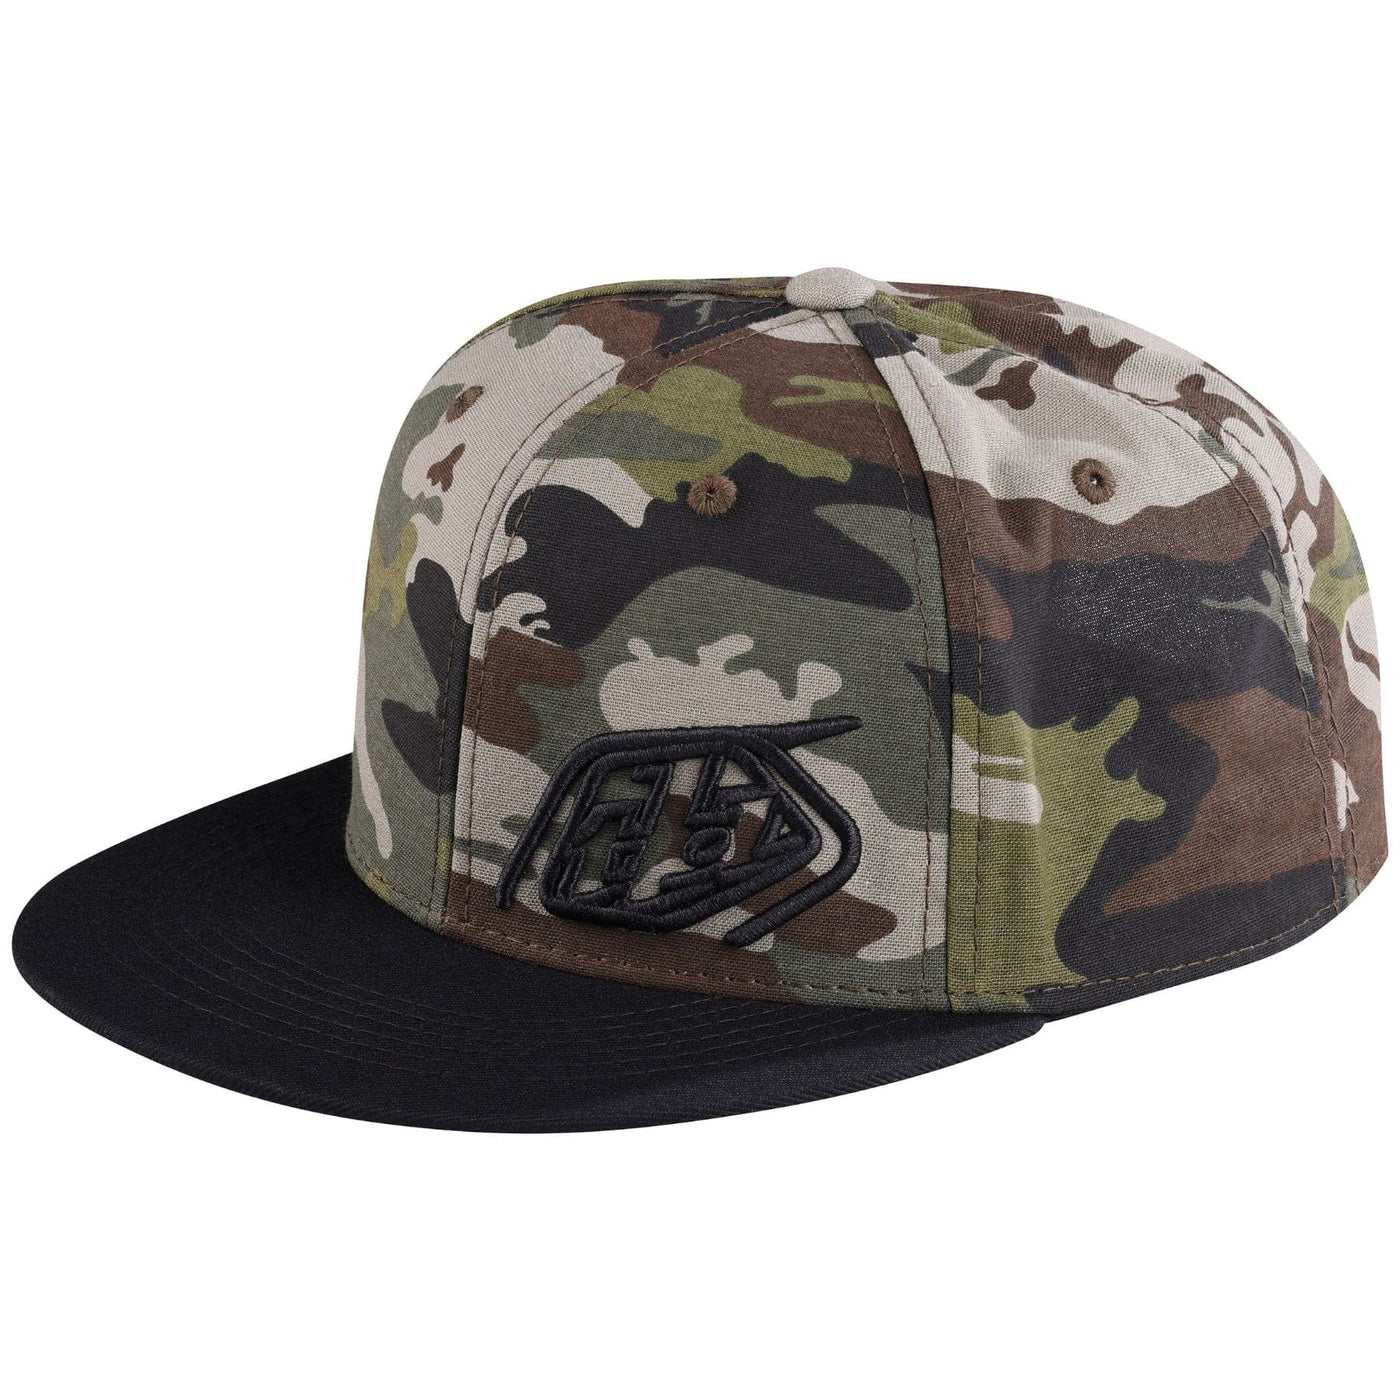 Troy Lee Designs 9FIFTY Slice Snapback Hat - Camo Army Green/Black